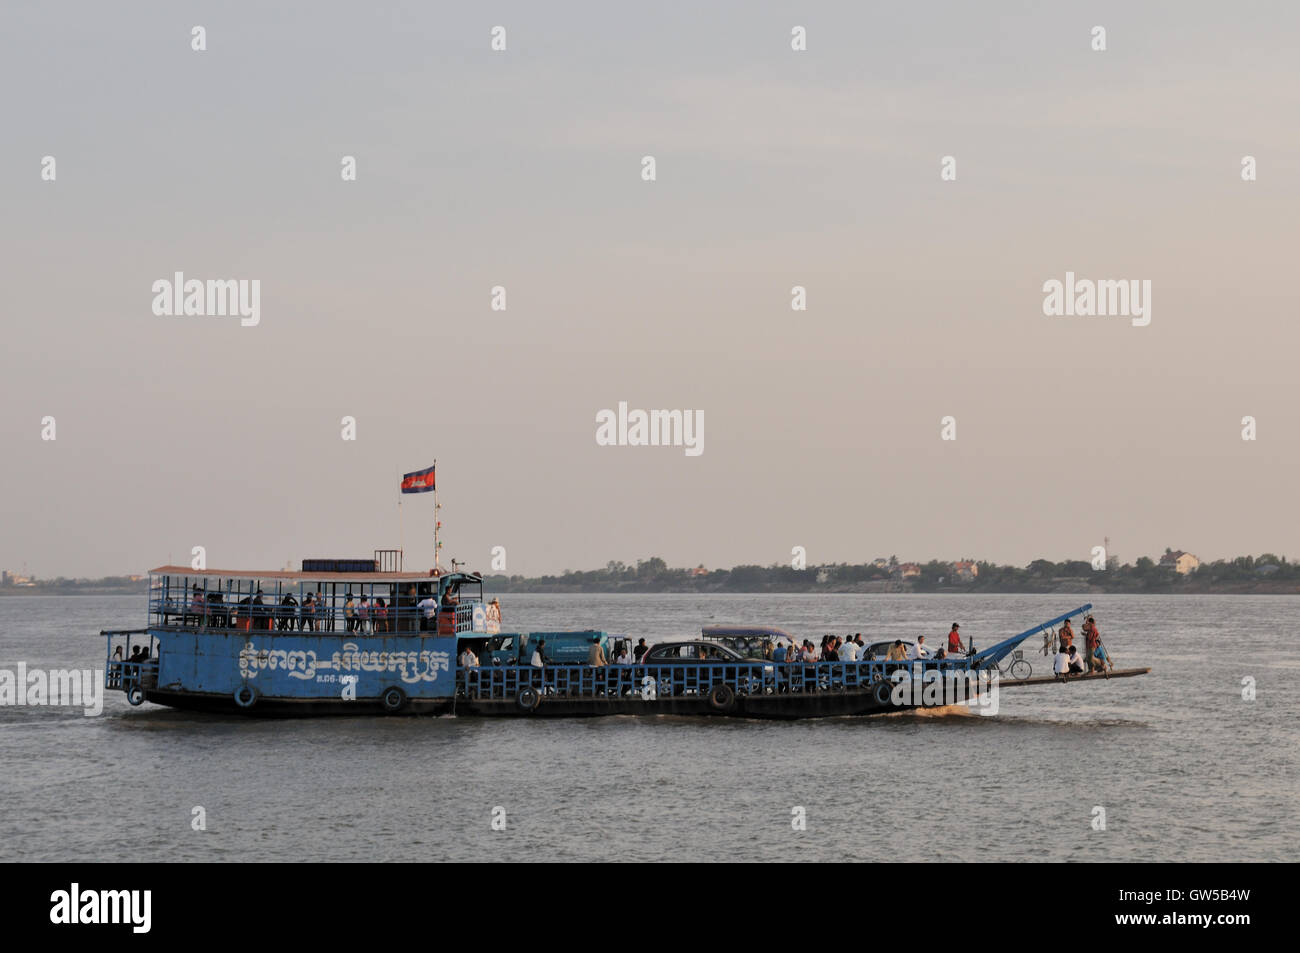 Phnom Penh - Confluence Of Tonlé Sep & Mekong Rivers - Ferry Stock Photo